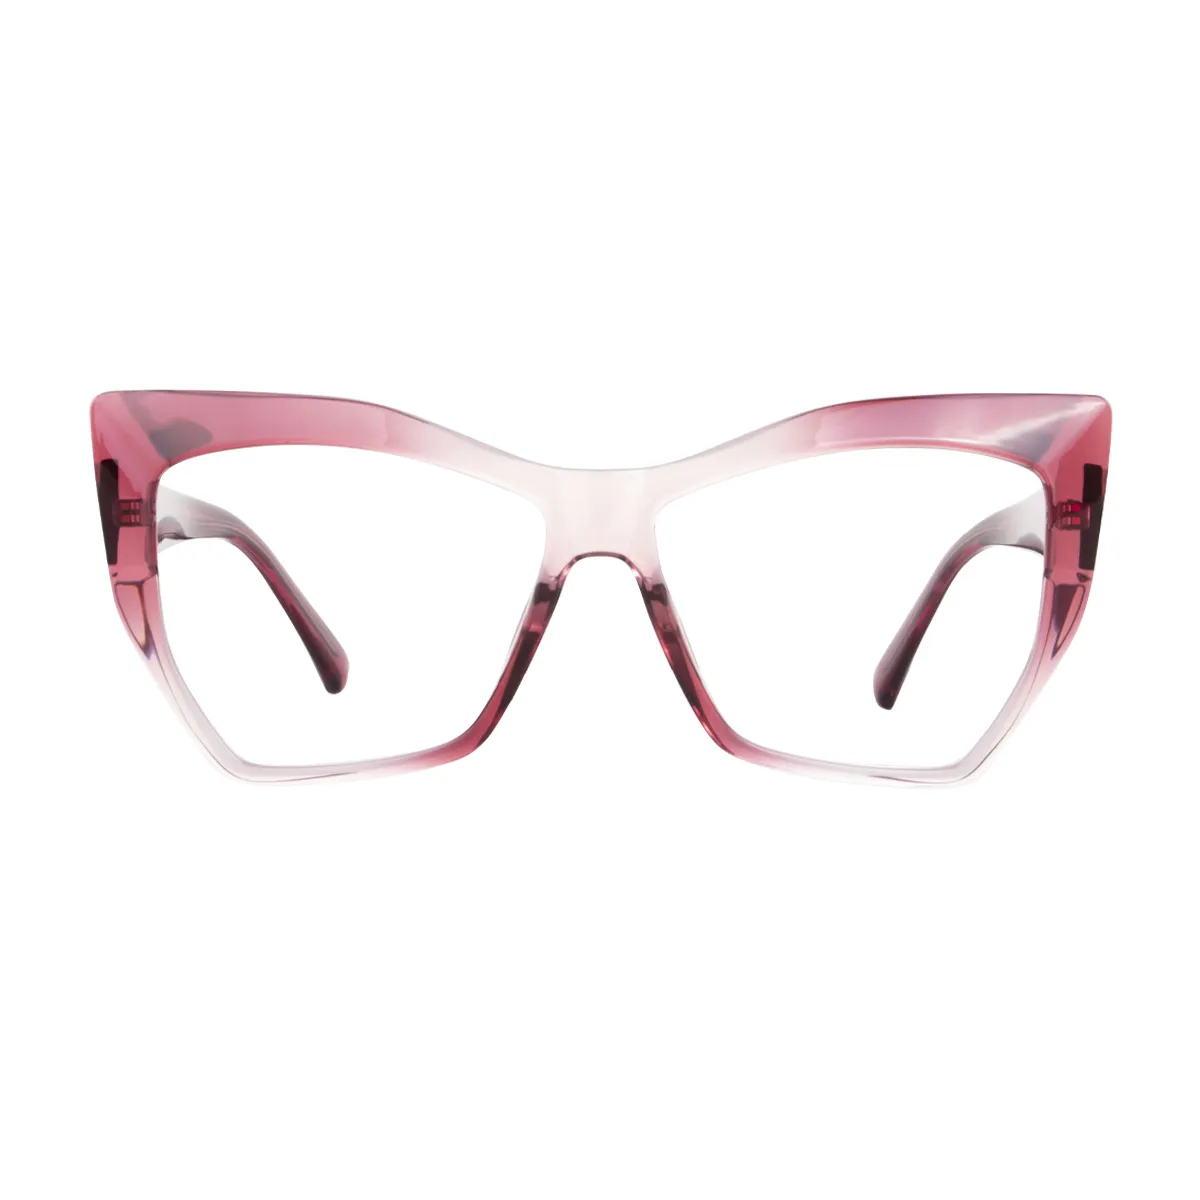 Lora - Cat-Eye Pink-Transparent Glasses for Women